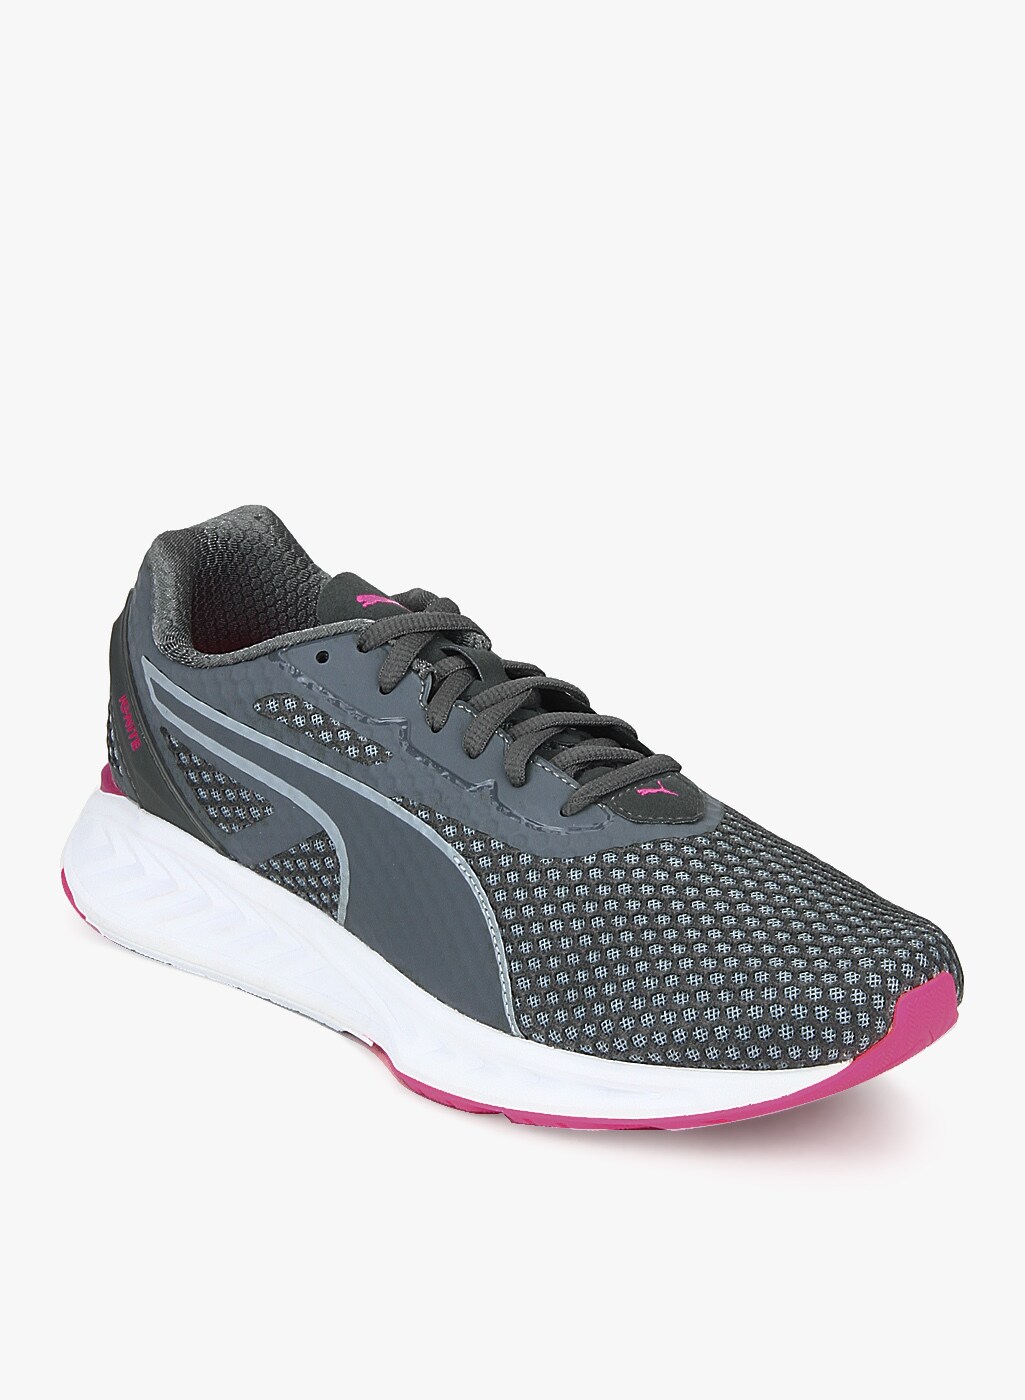 Puma Ignite 3 Wn S Grey Running Shoes 